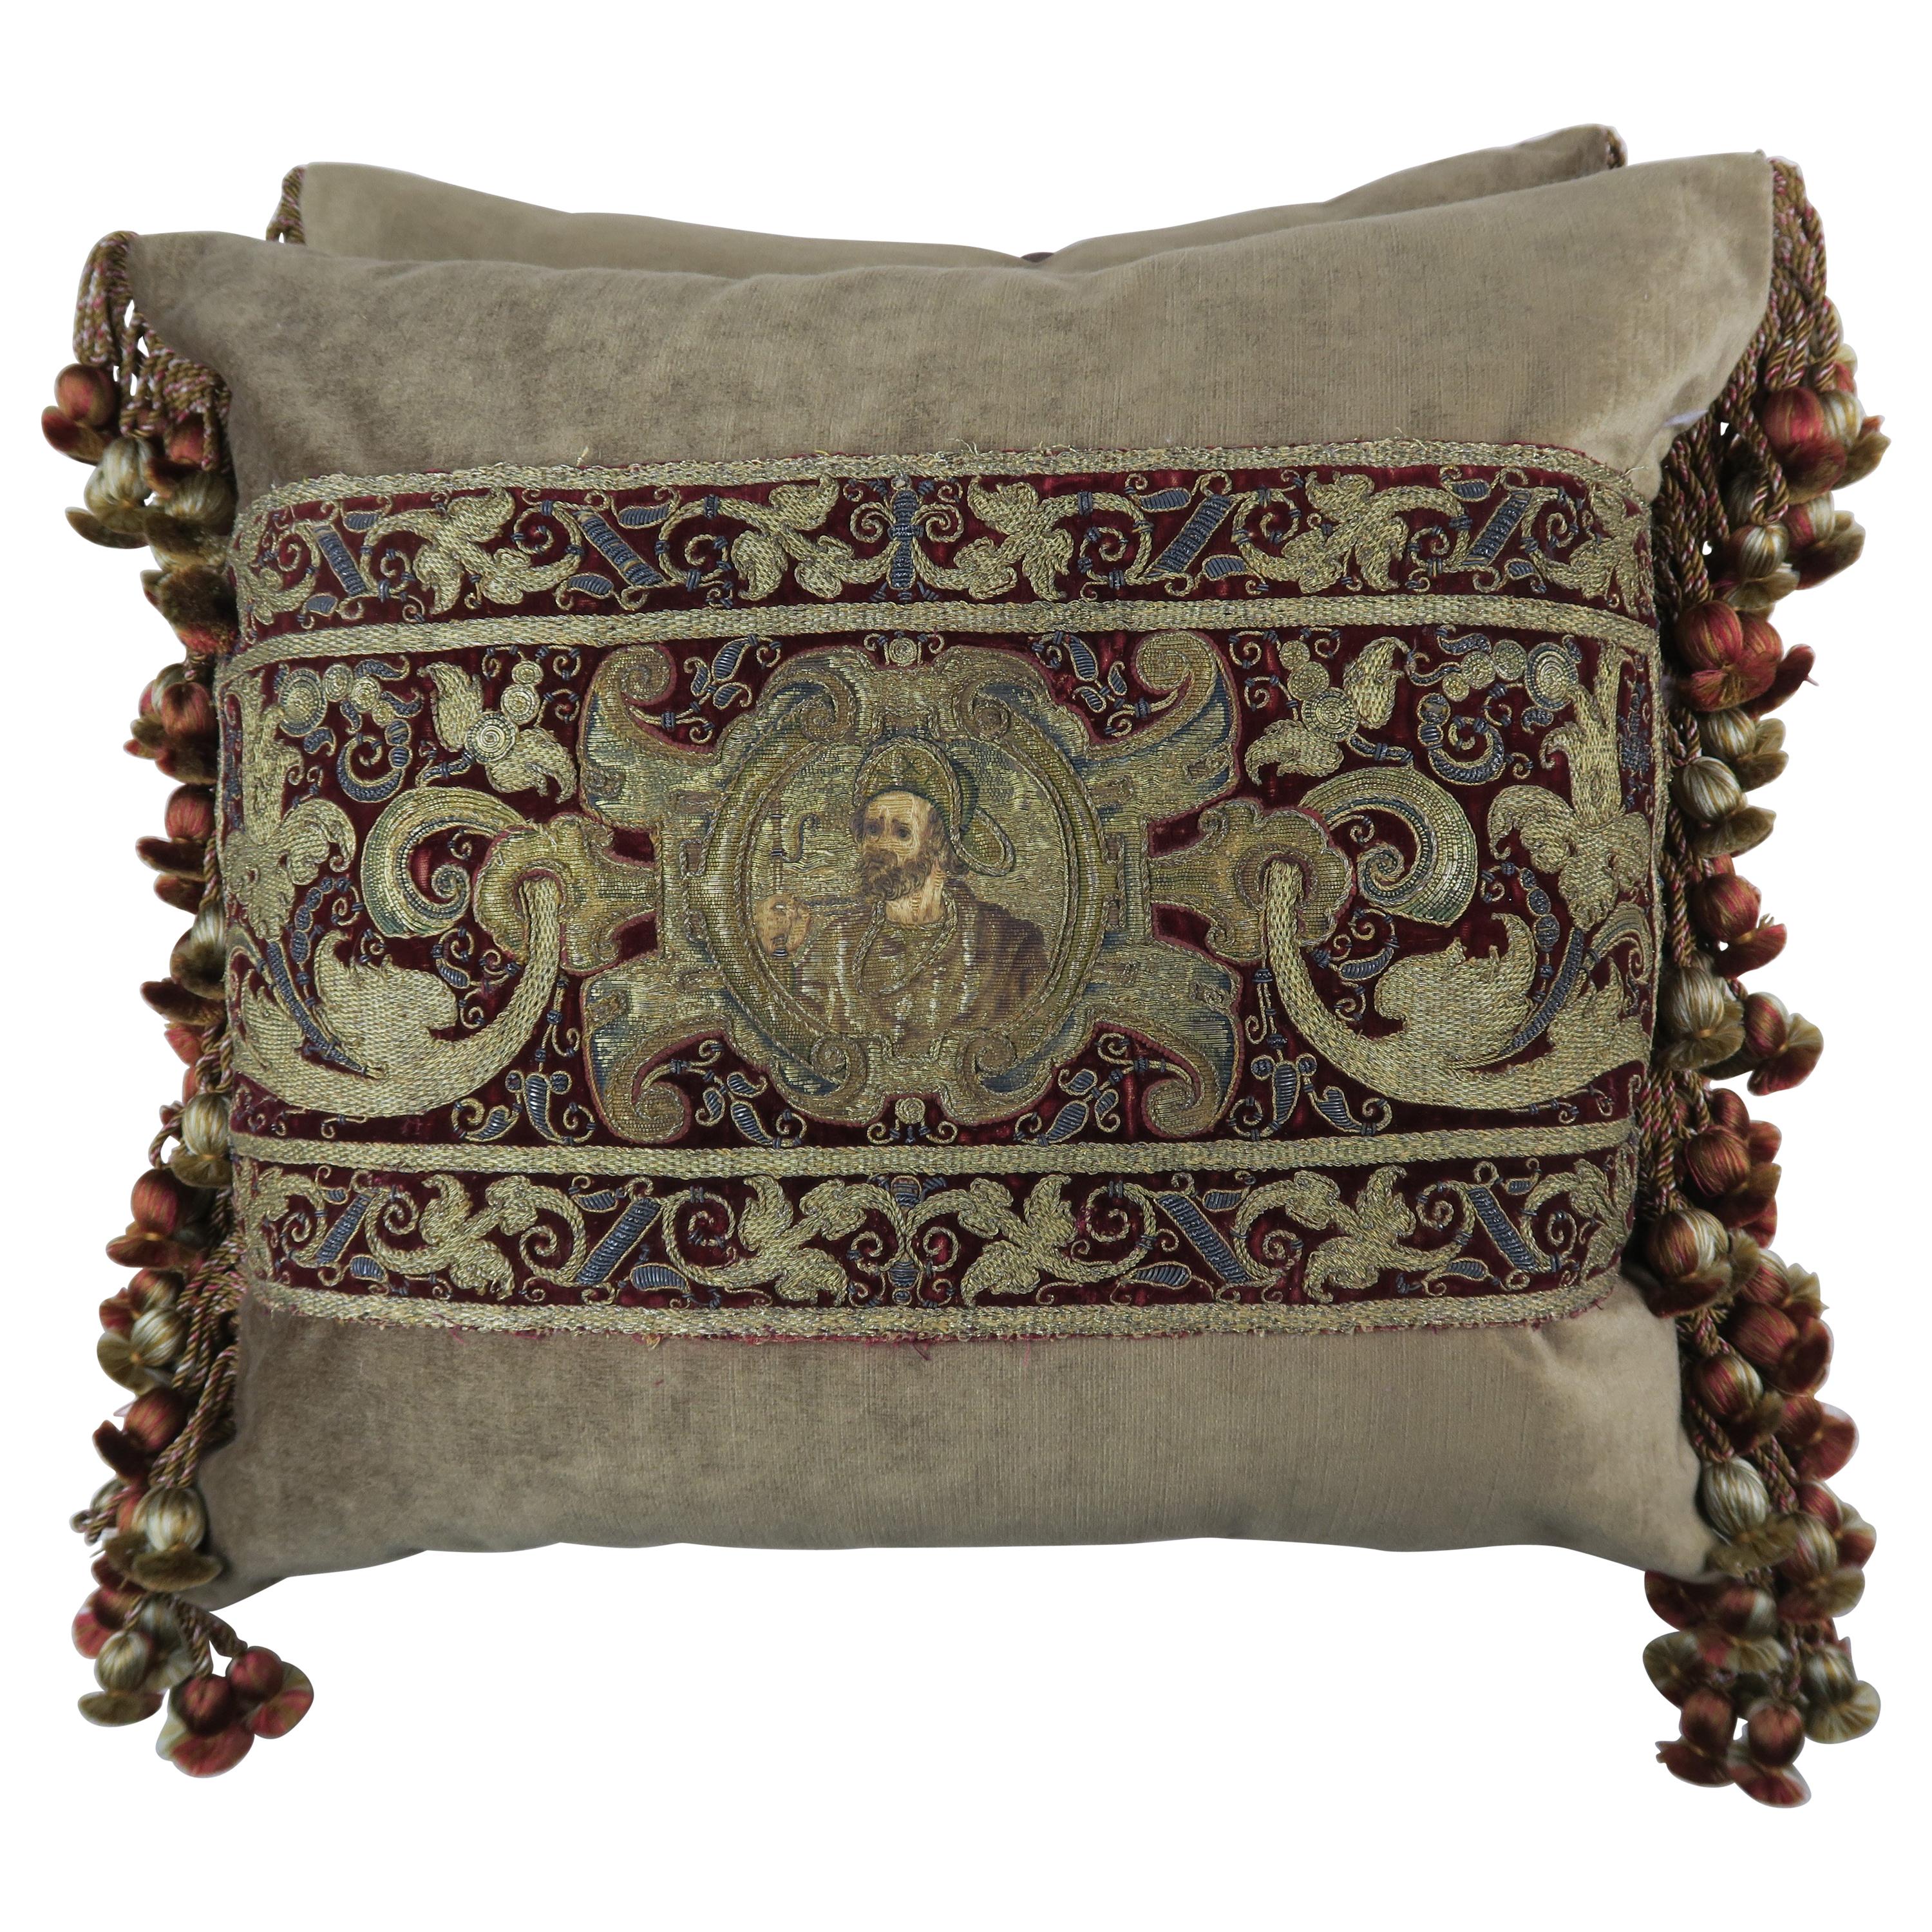 18th Century Italian Metallic Embroidered Apostle Pillows by Melissa Levinson